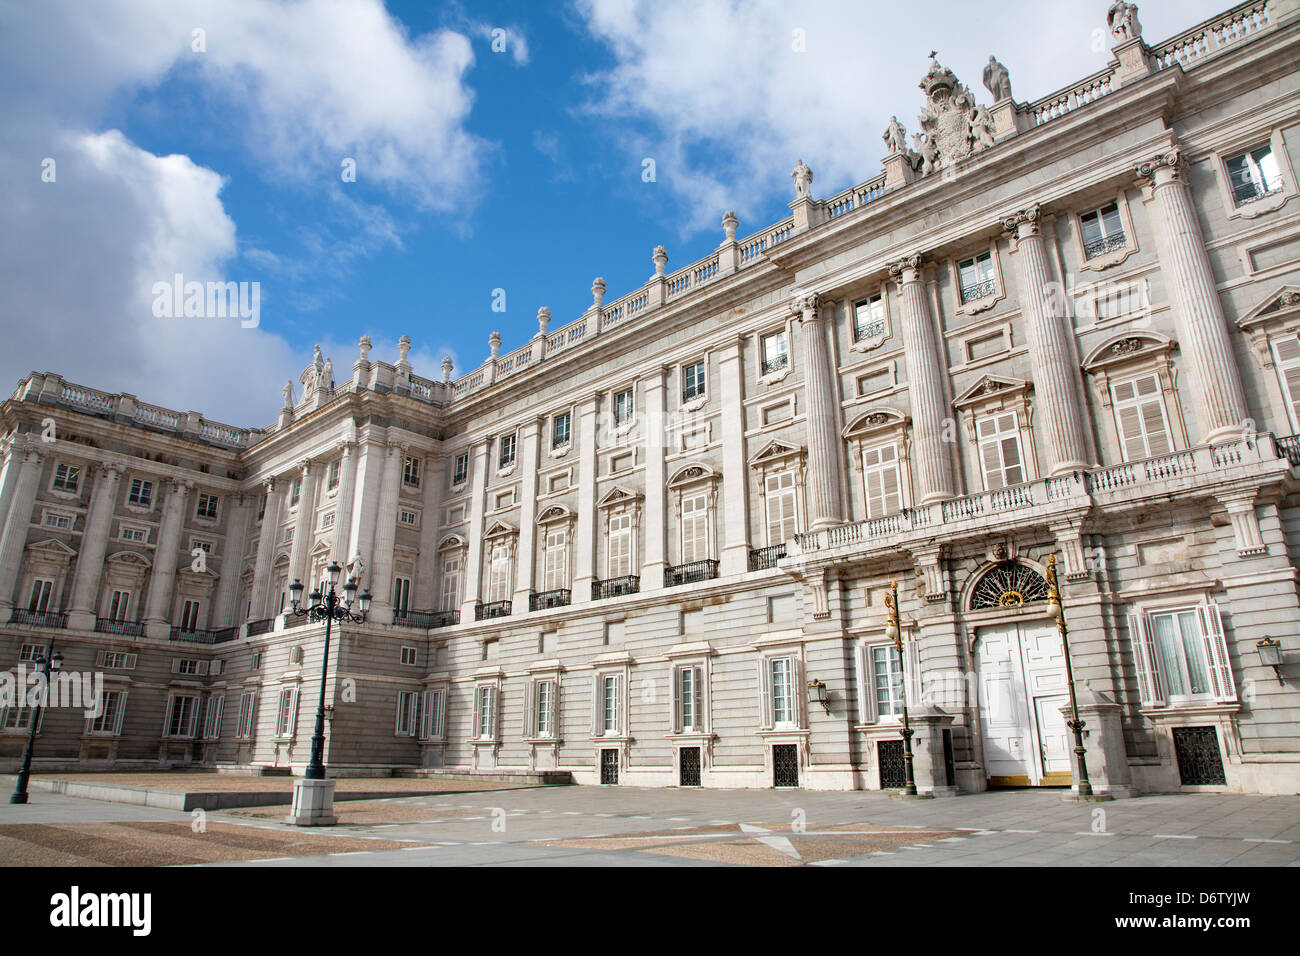 MADRID - März 10: Nord - Ostfassade des Palacio Real oder Royal palace Stockfoto